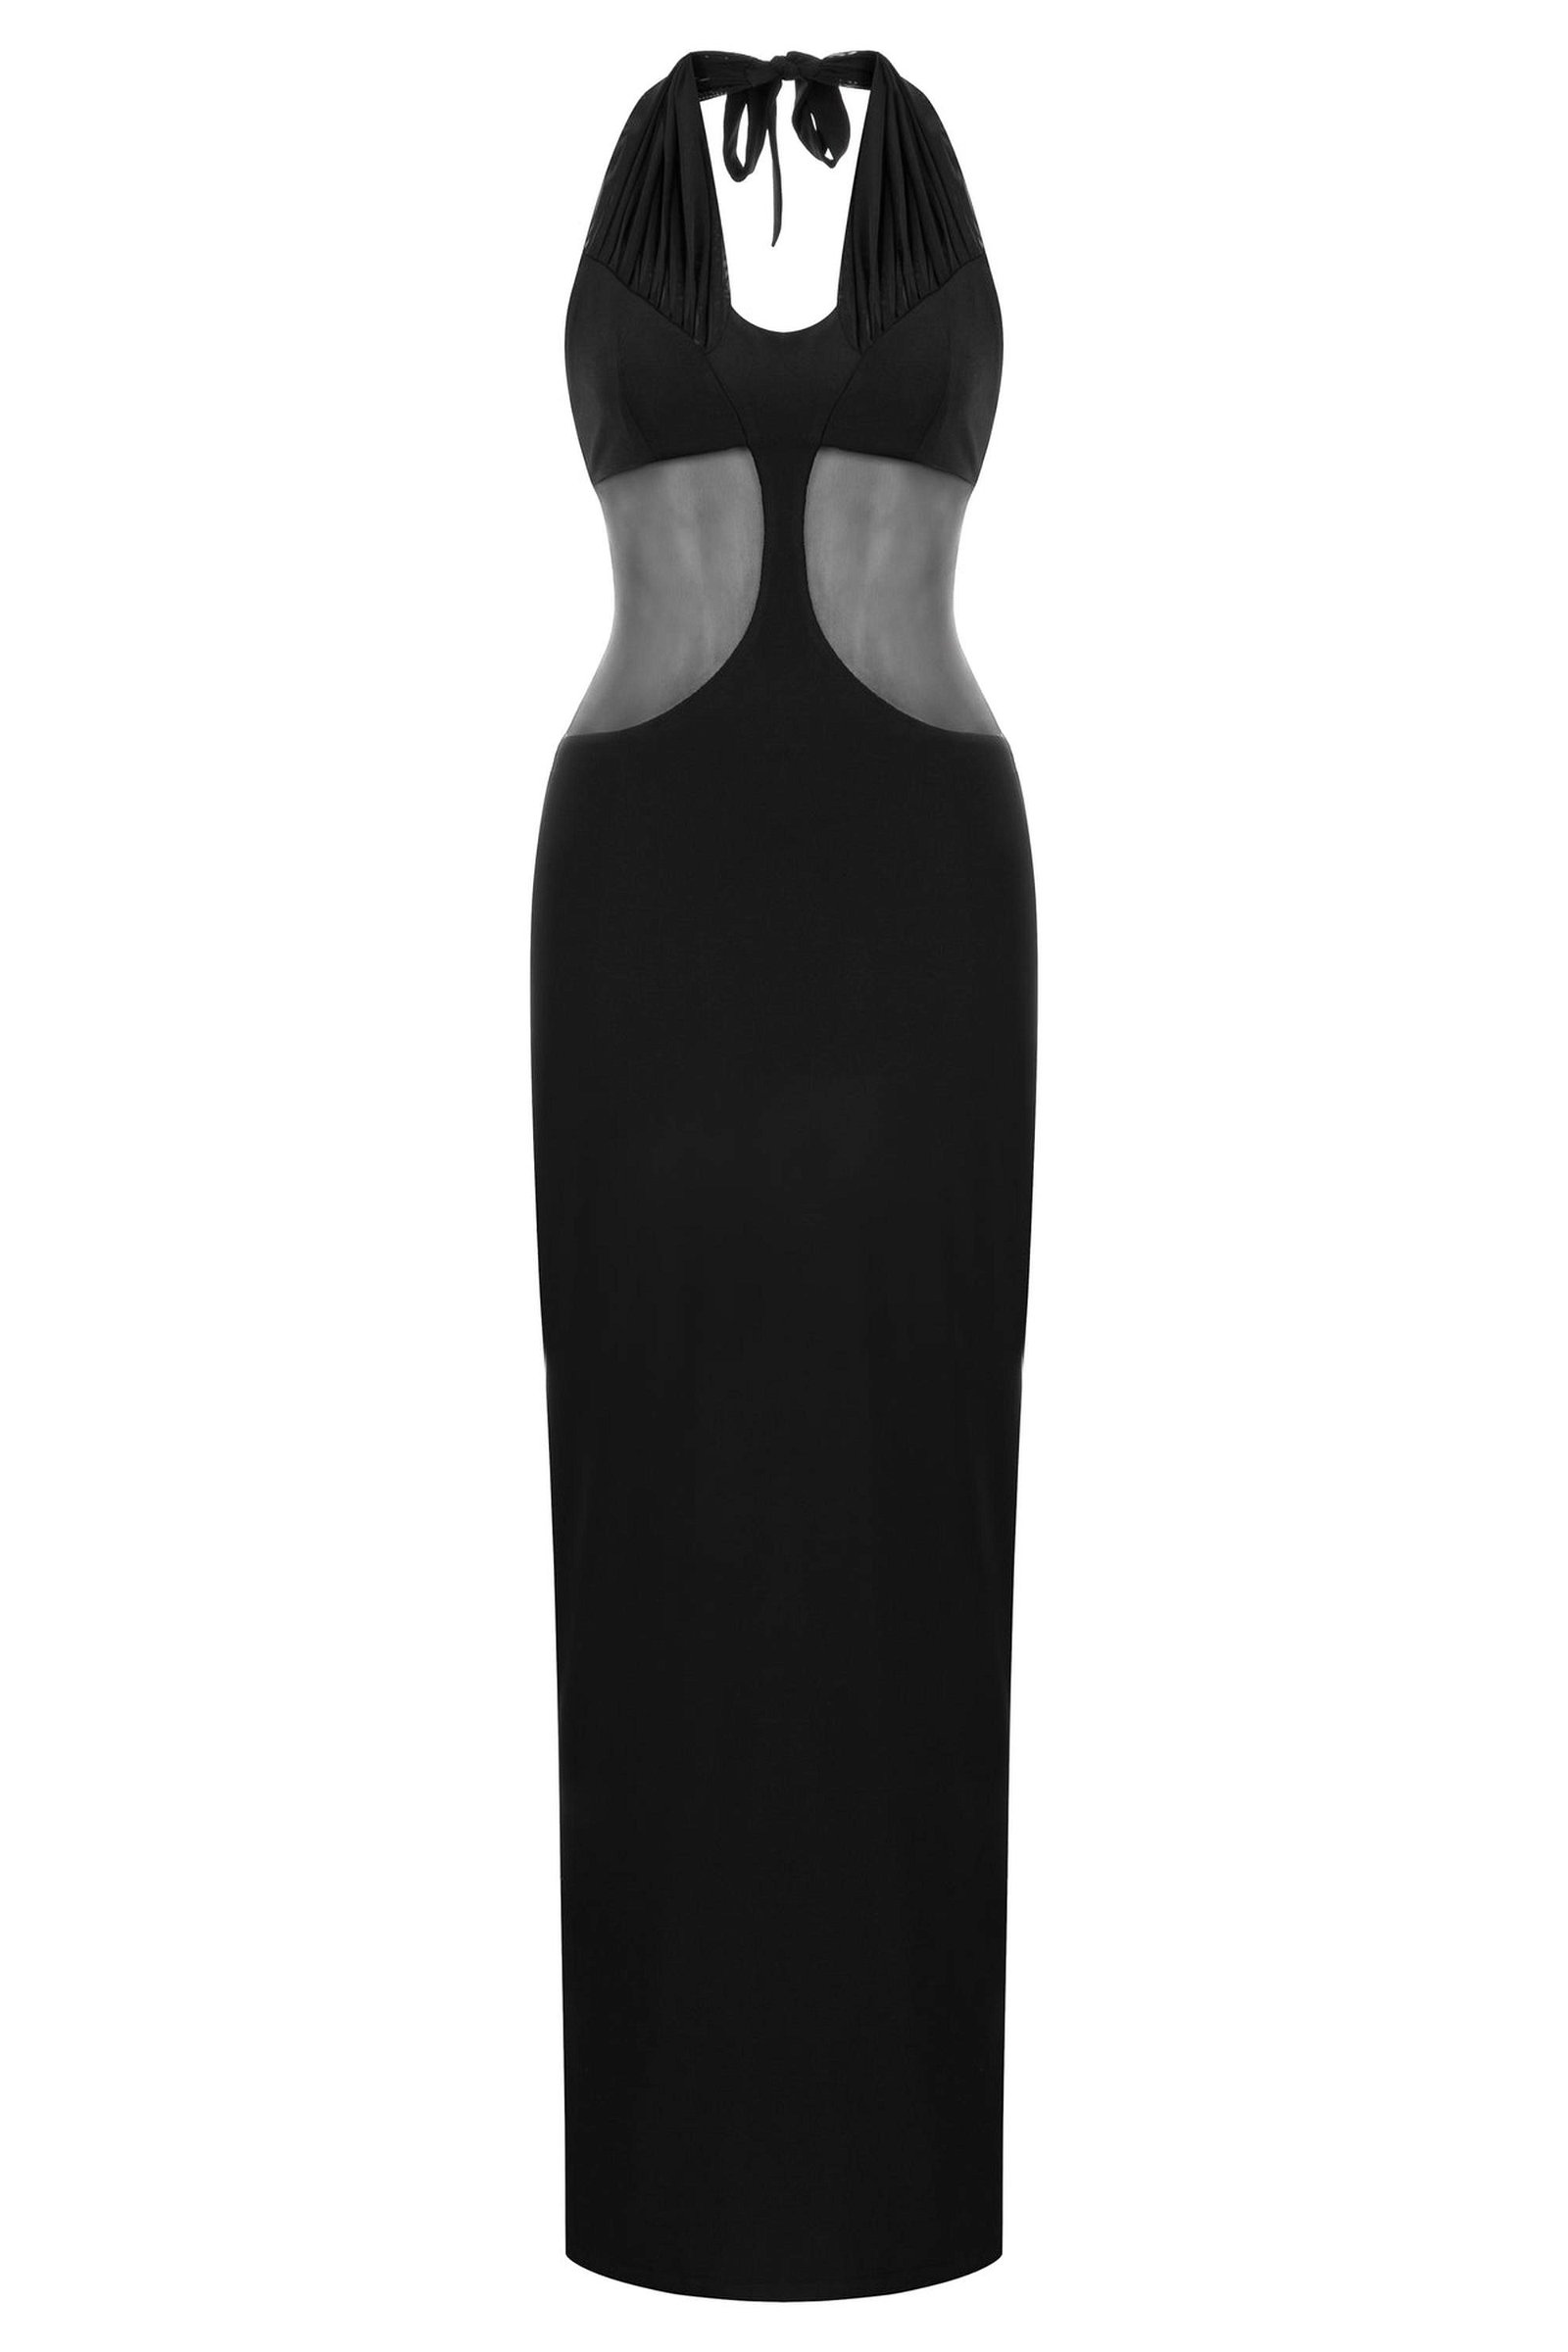 Khela The Label Kadın His Favorite Elbise Siyah